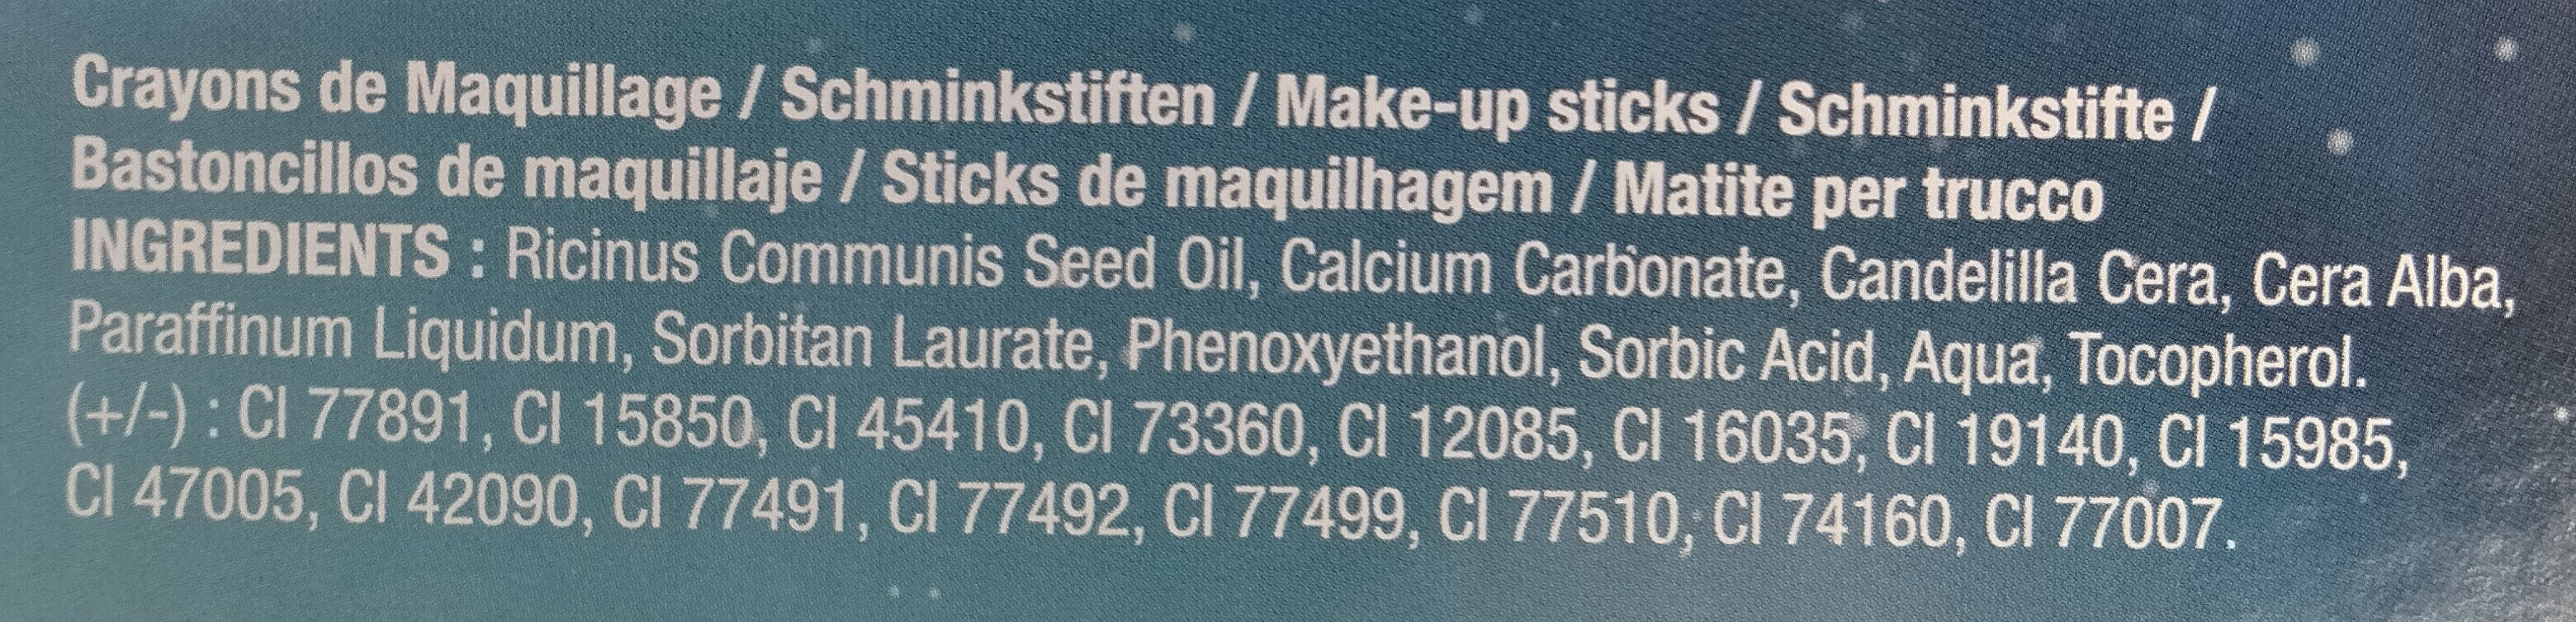 crayons de maquillage - Ingredients - fr